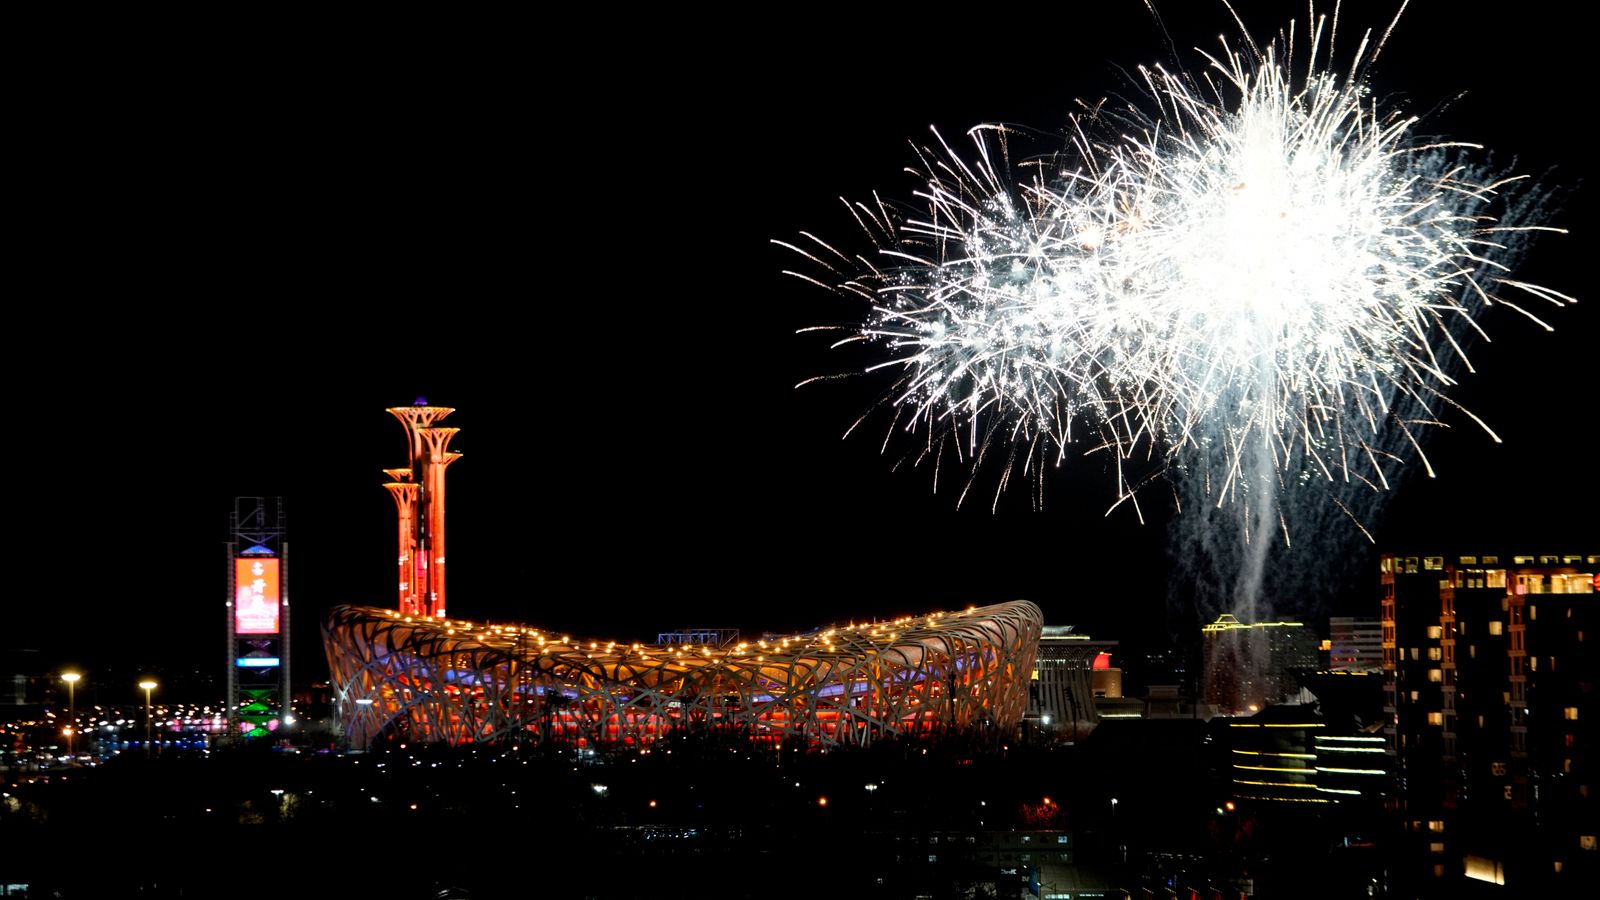 Beijing Winter Olympics Opening ceremony culminates in fireworks